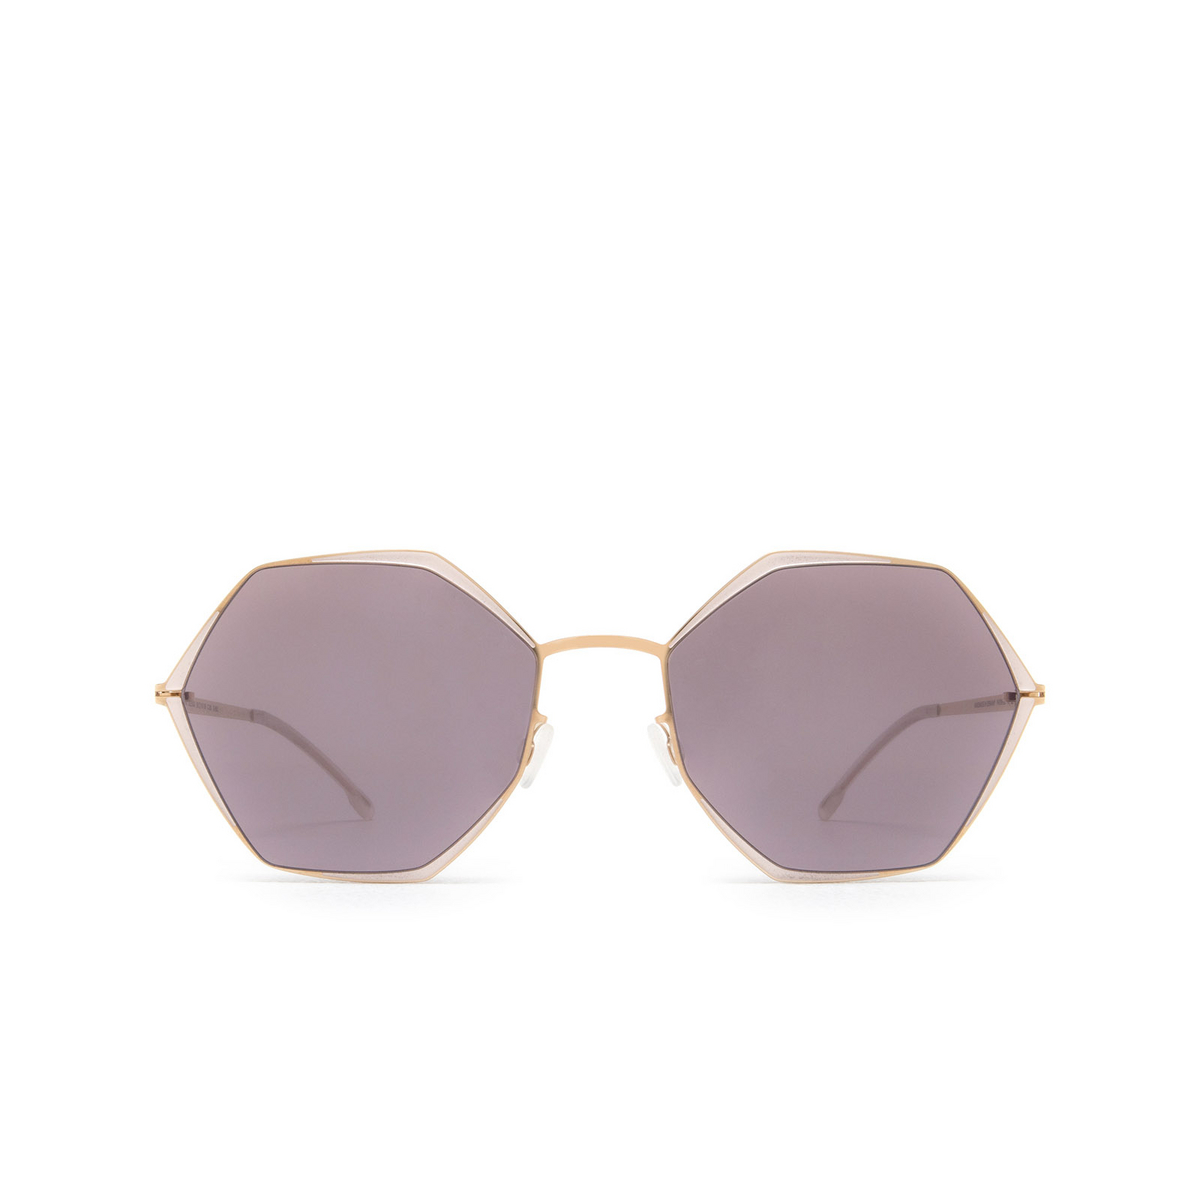 Mykita® Irregular Sunglasses: Alessia color 283 Champagne Gold/aurore - front view